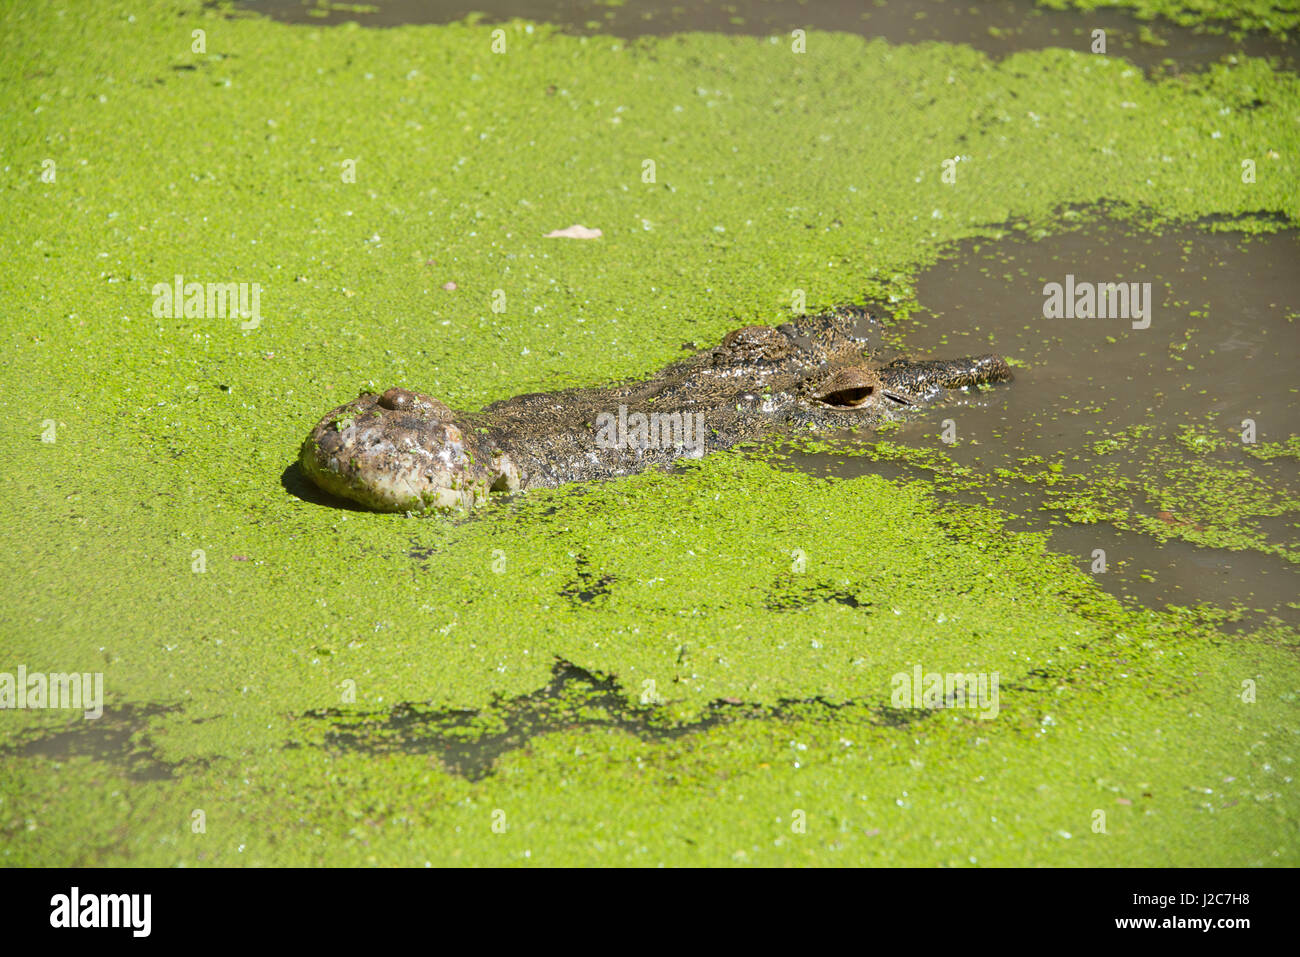 Western Australia, Broome. Malcolm Douglas Crocodile Park. Saltwater crocodiles (Crocodylus porosus) in green duckweed covered pond (introduced species, Lemna minuta). (Large format sizes available) Stock Photo